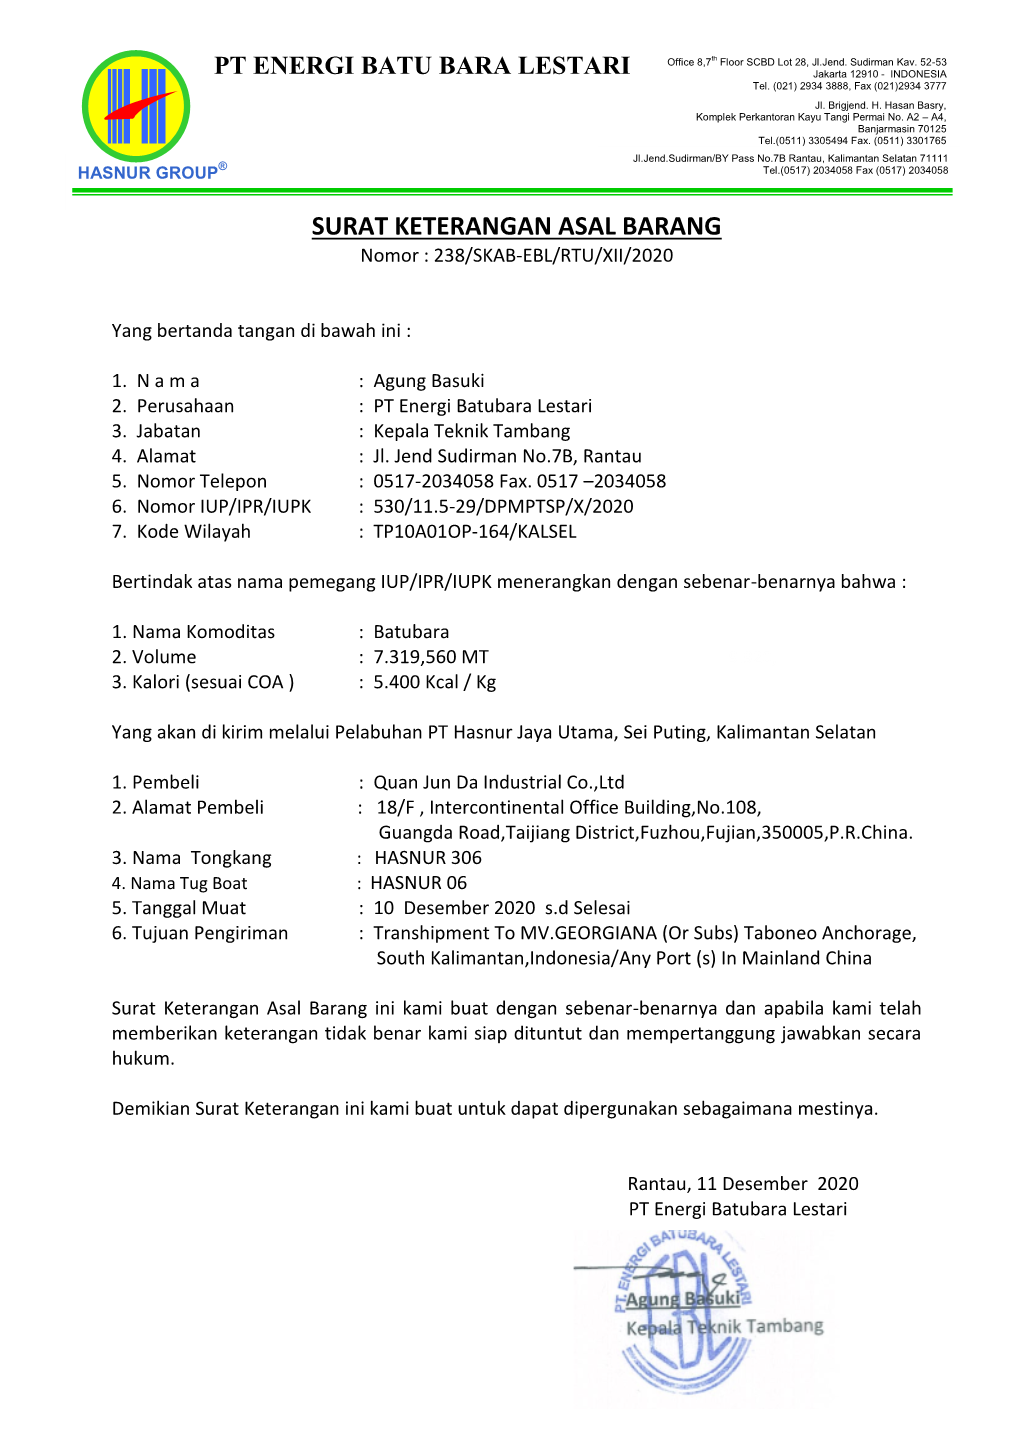 Surat Keterangan Asal Barang -.: Banjarportnet